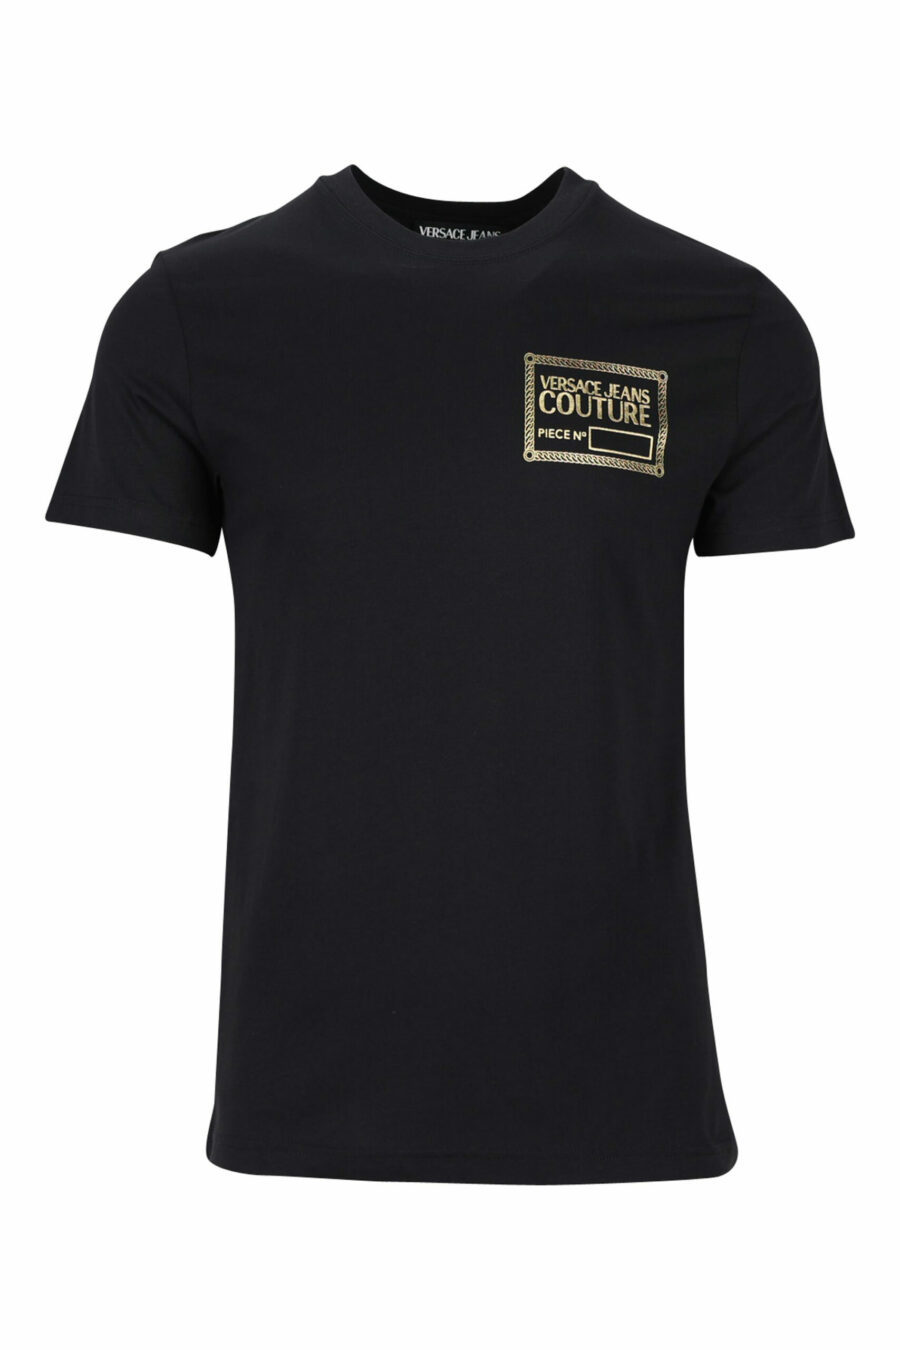 Camiseta negra con minilogo "piece number" dorado - 8052019456875 scaled